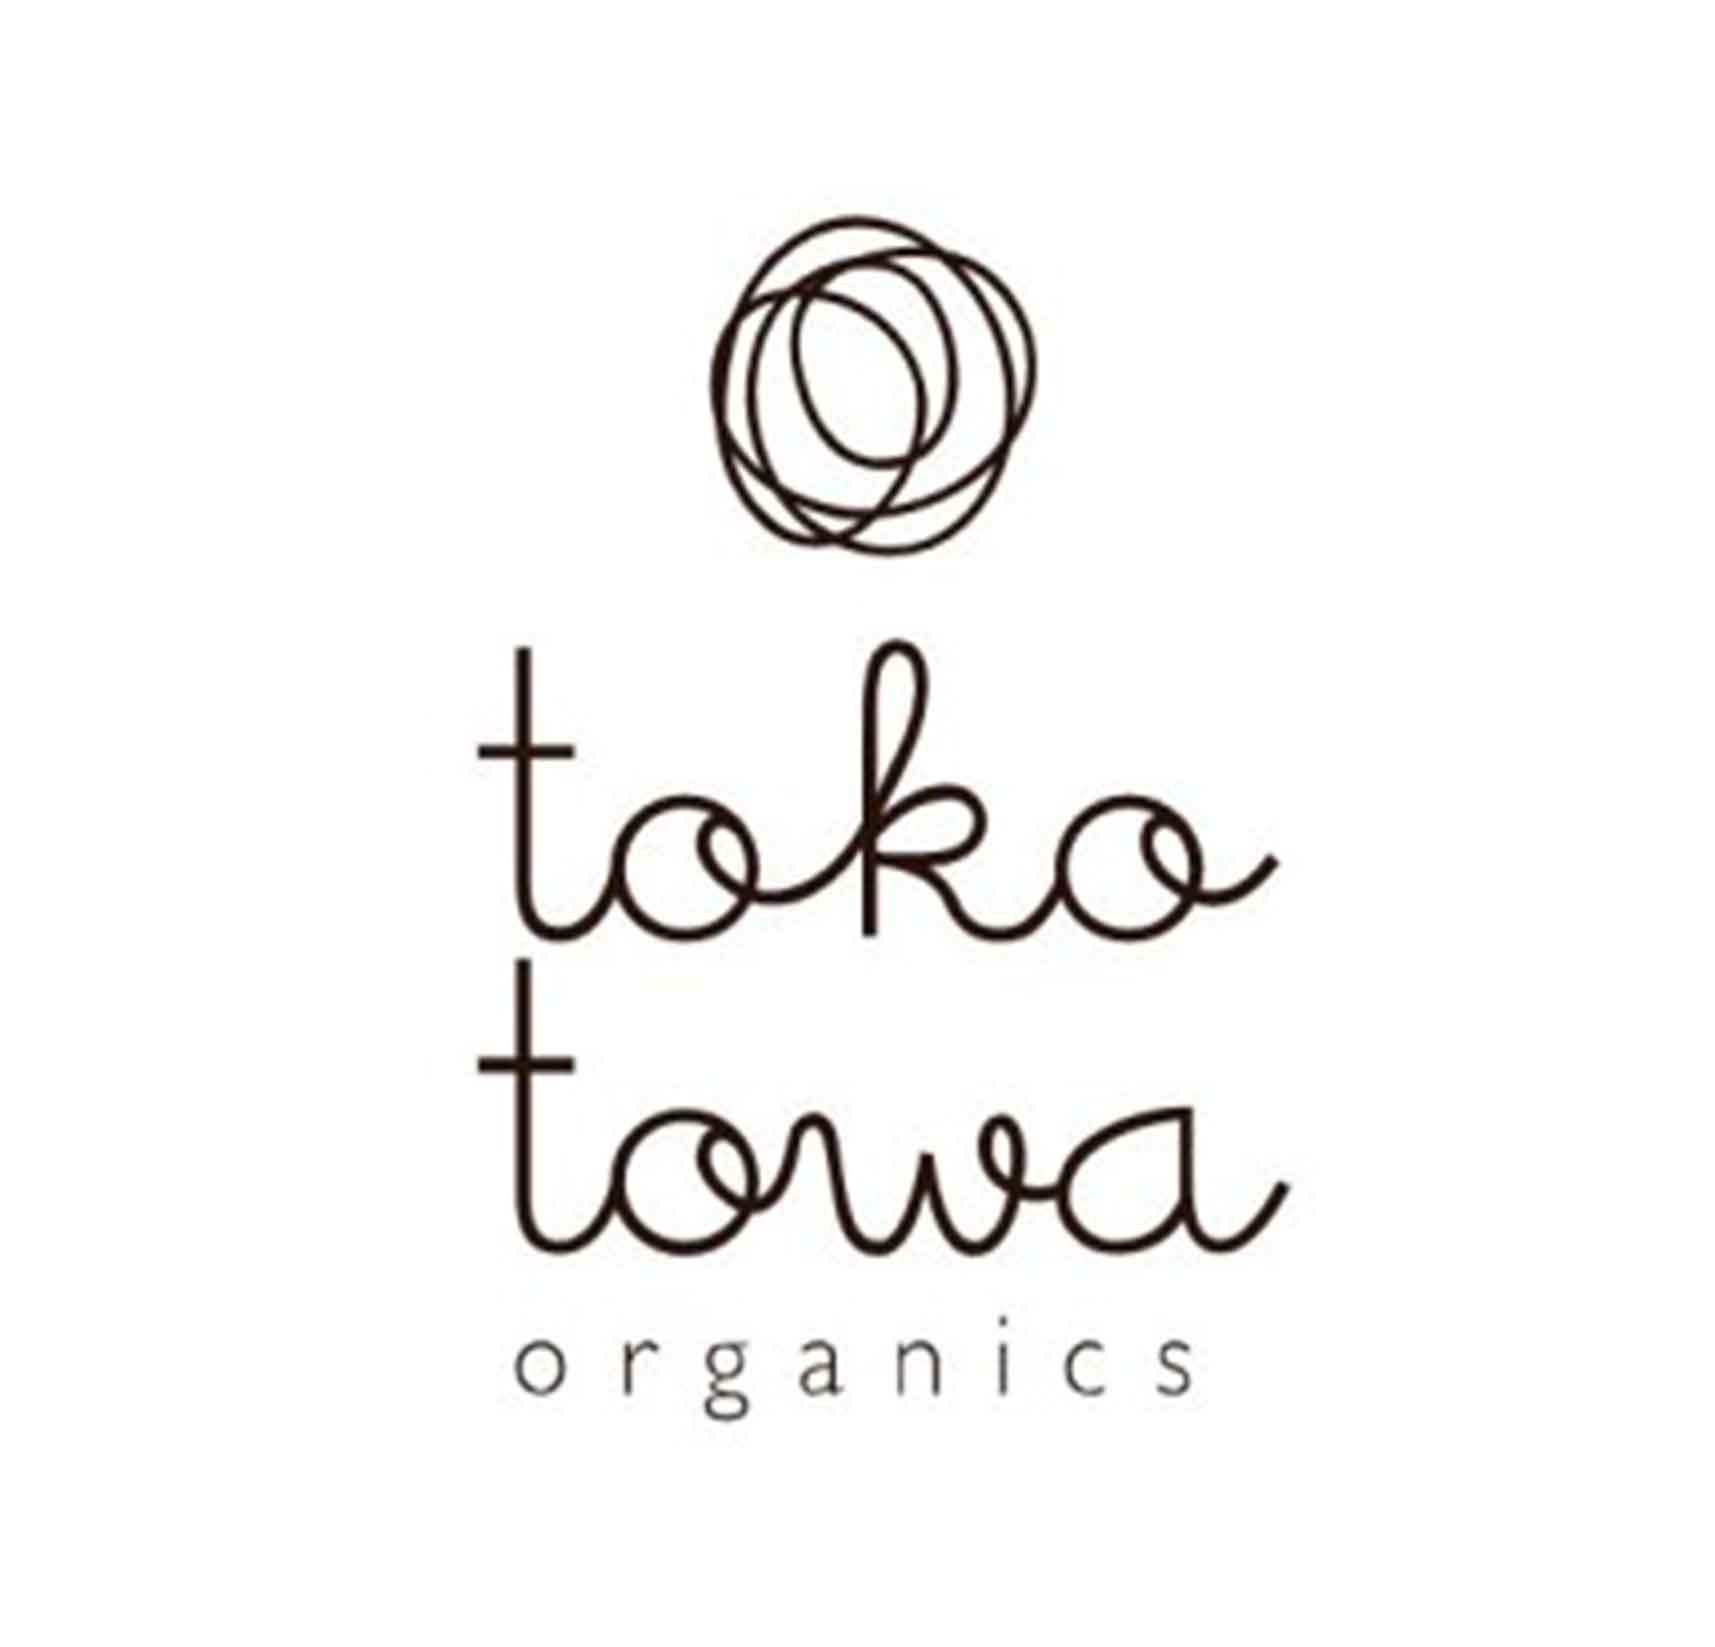 tokotowa organics